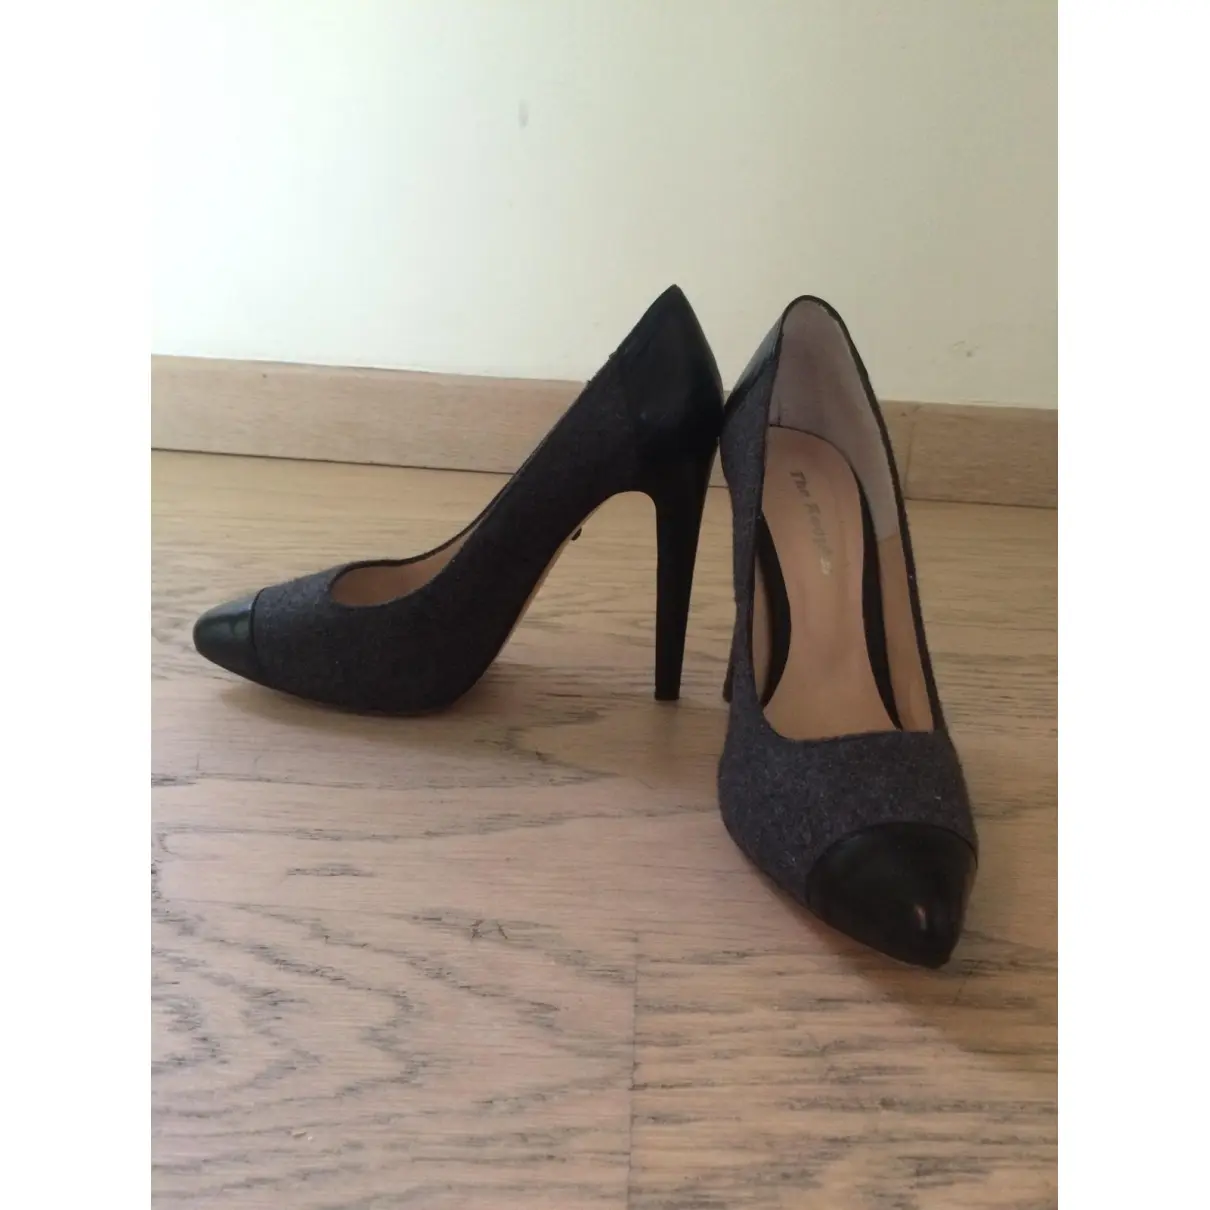 Buy The Kooples Leather heels online